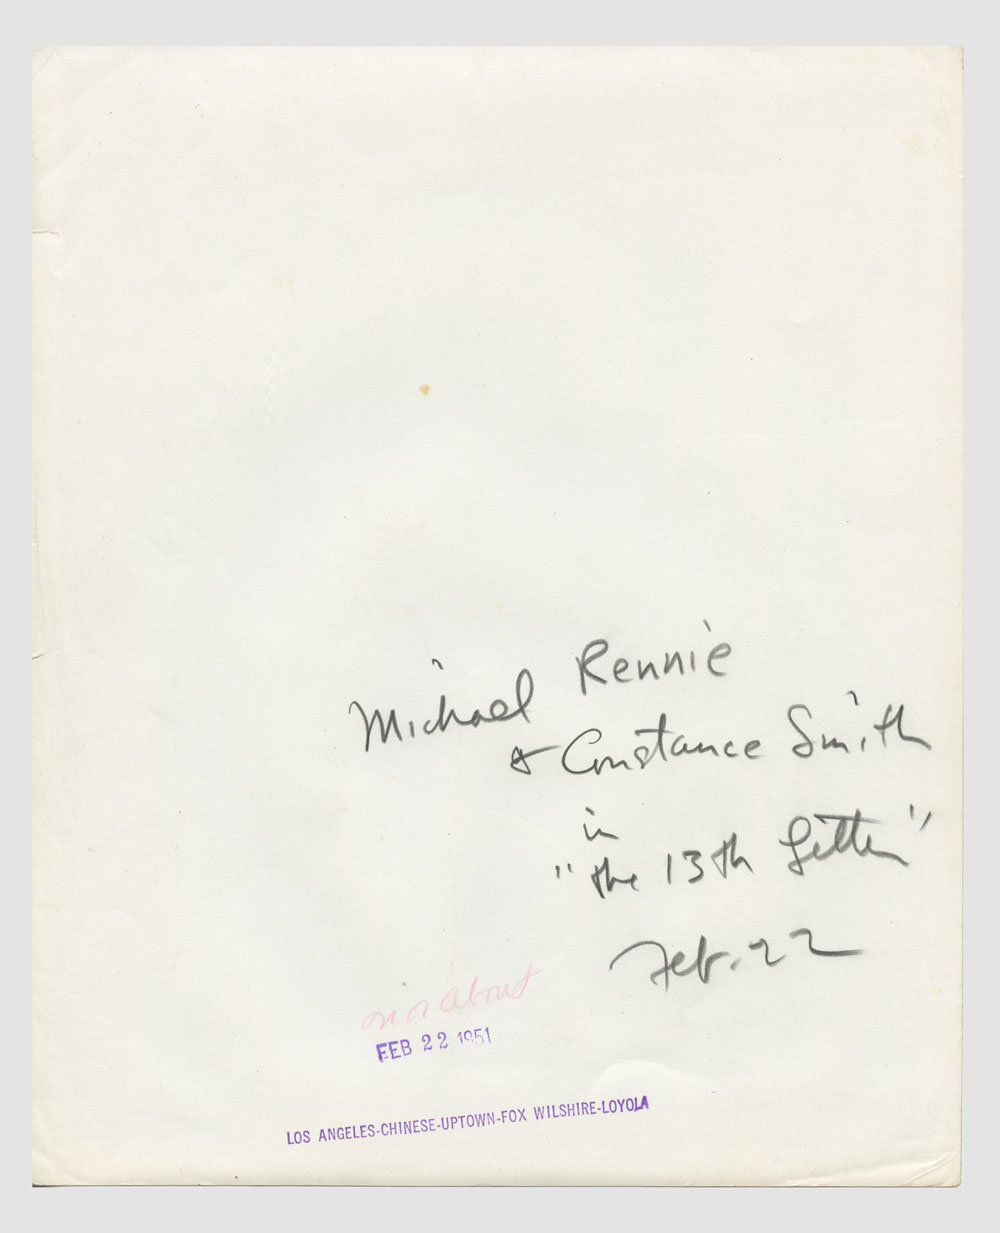 Michael Rennie Constance Smith Photo 1951 The 13th Letter Original Vintage